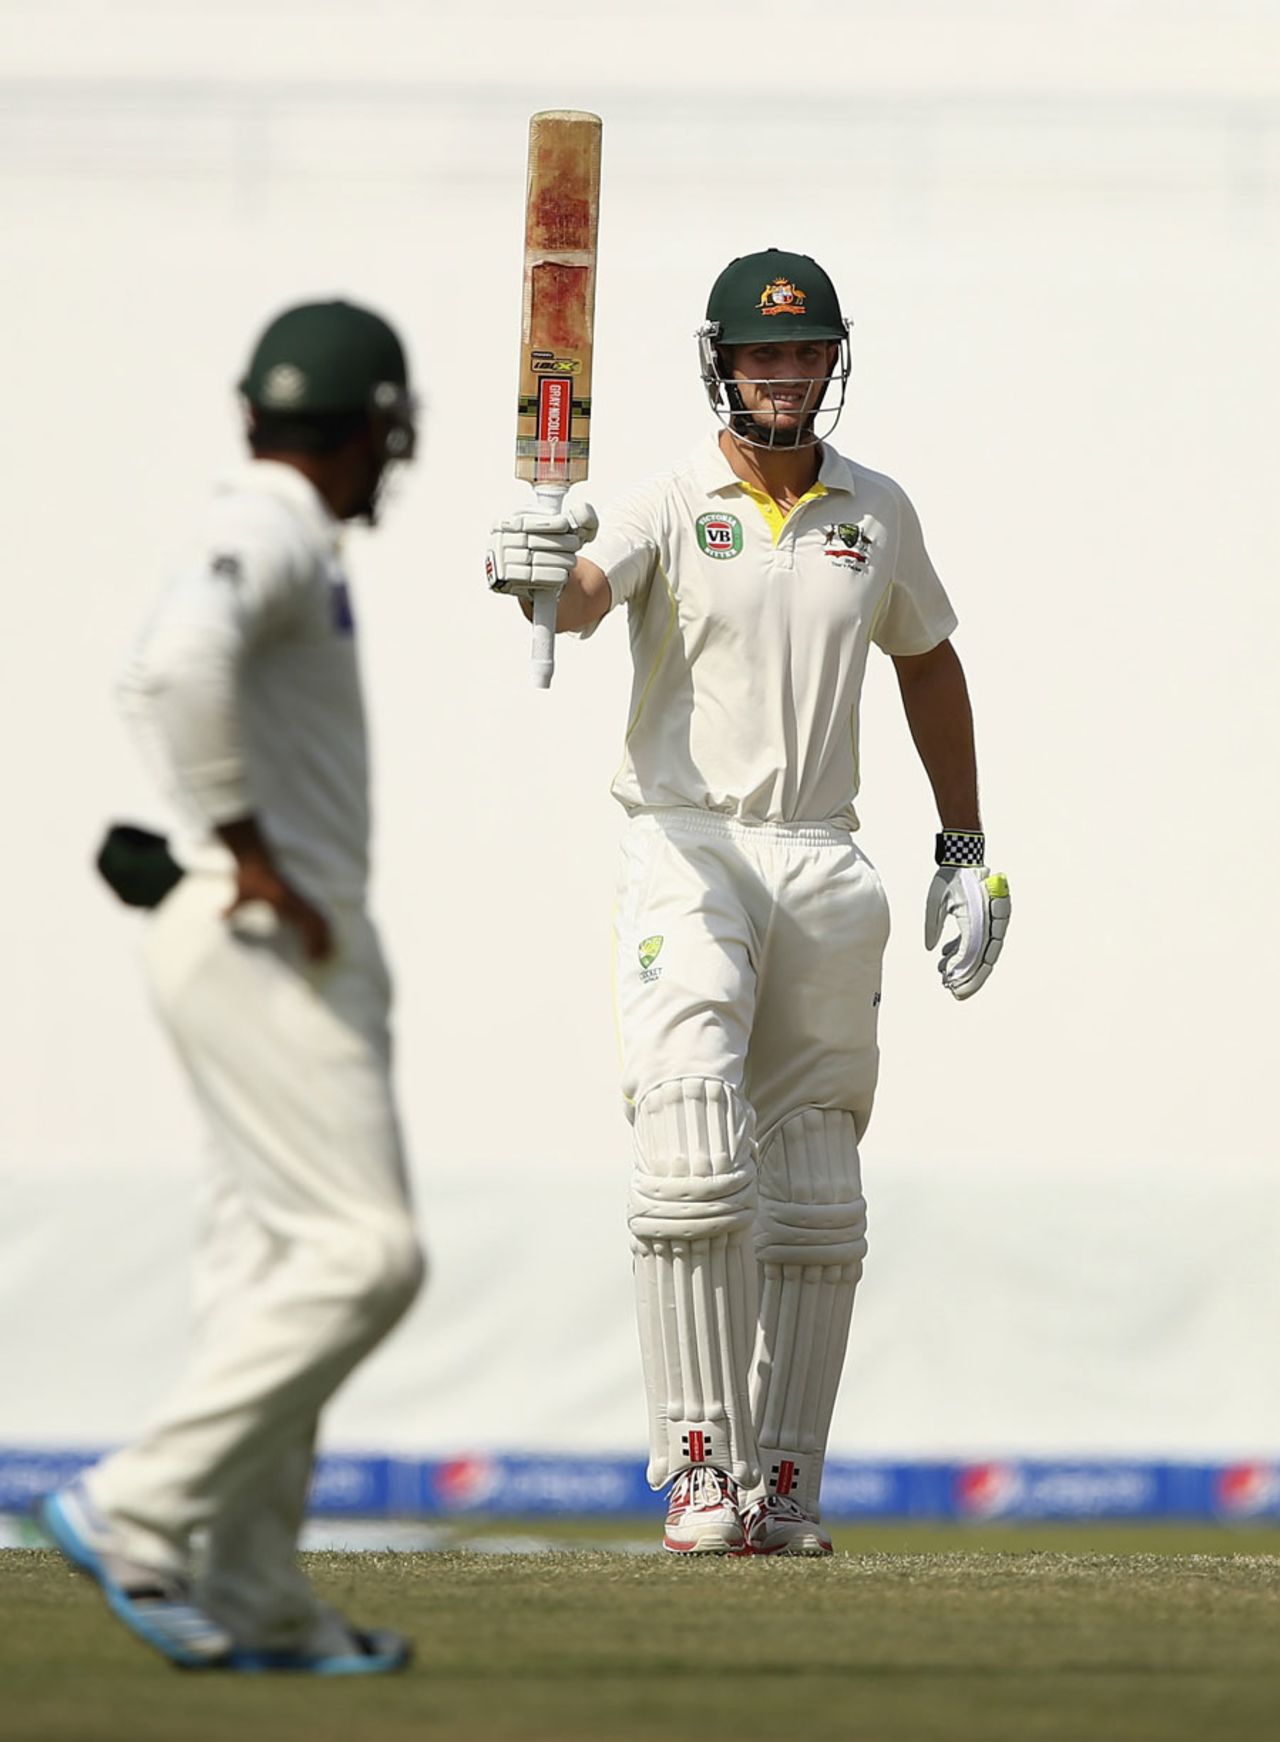 Mitchell Marsh raised a fifty amid a batting collapse, Pakistan v Australia, 2nd Test, Abu Dhabi, 3rd day, November 1, 2014